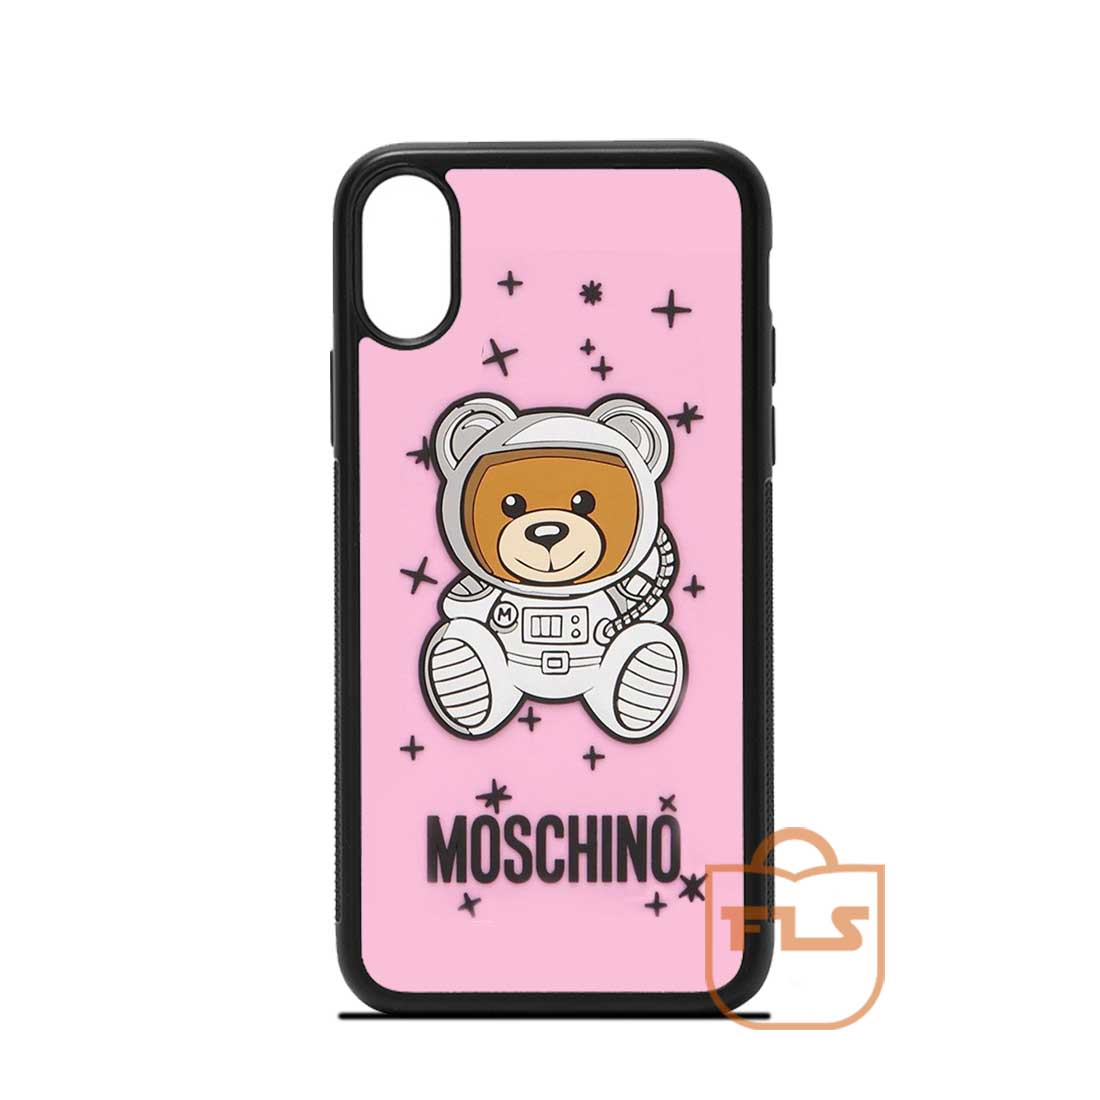 moschino iphone x max case